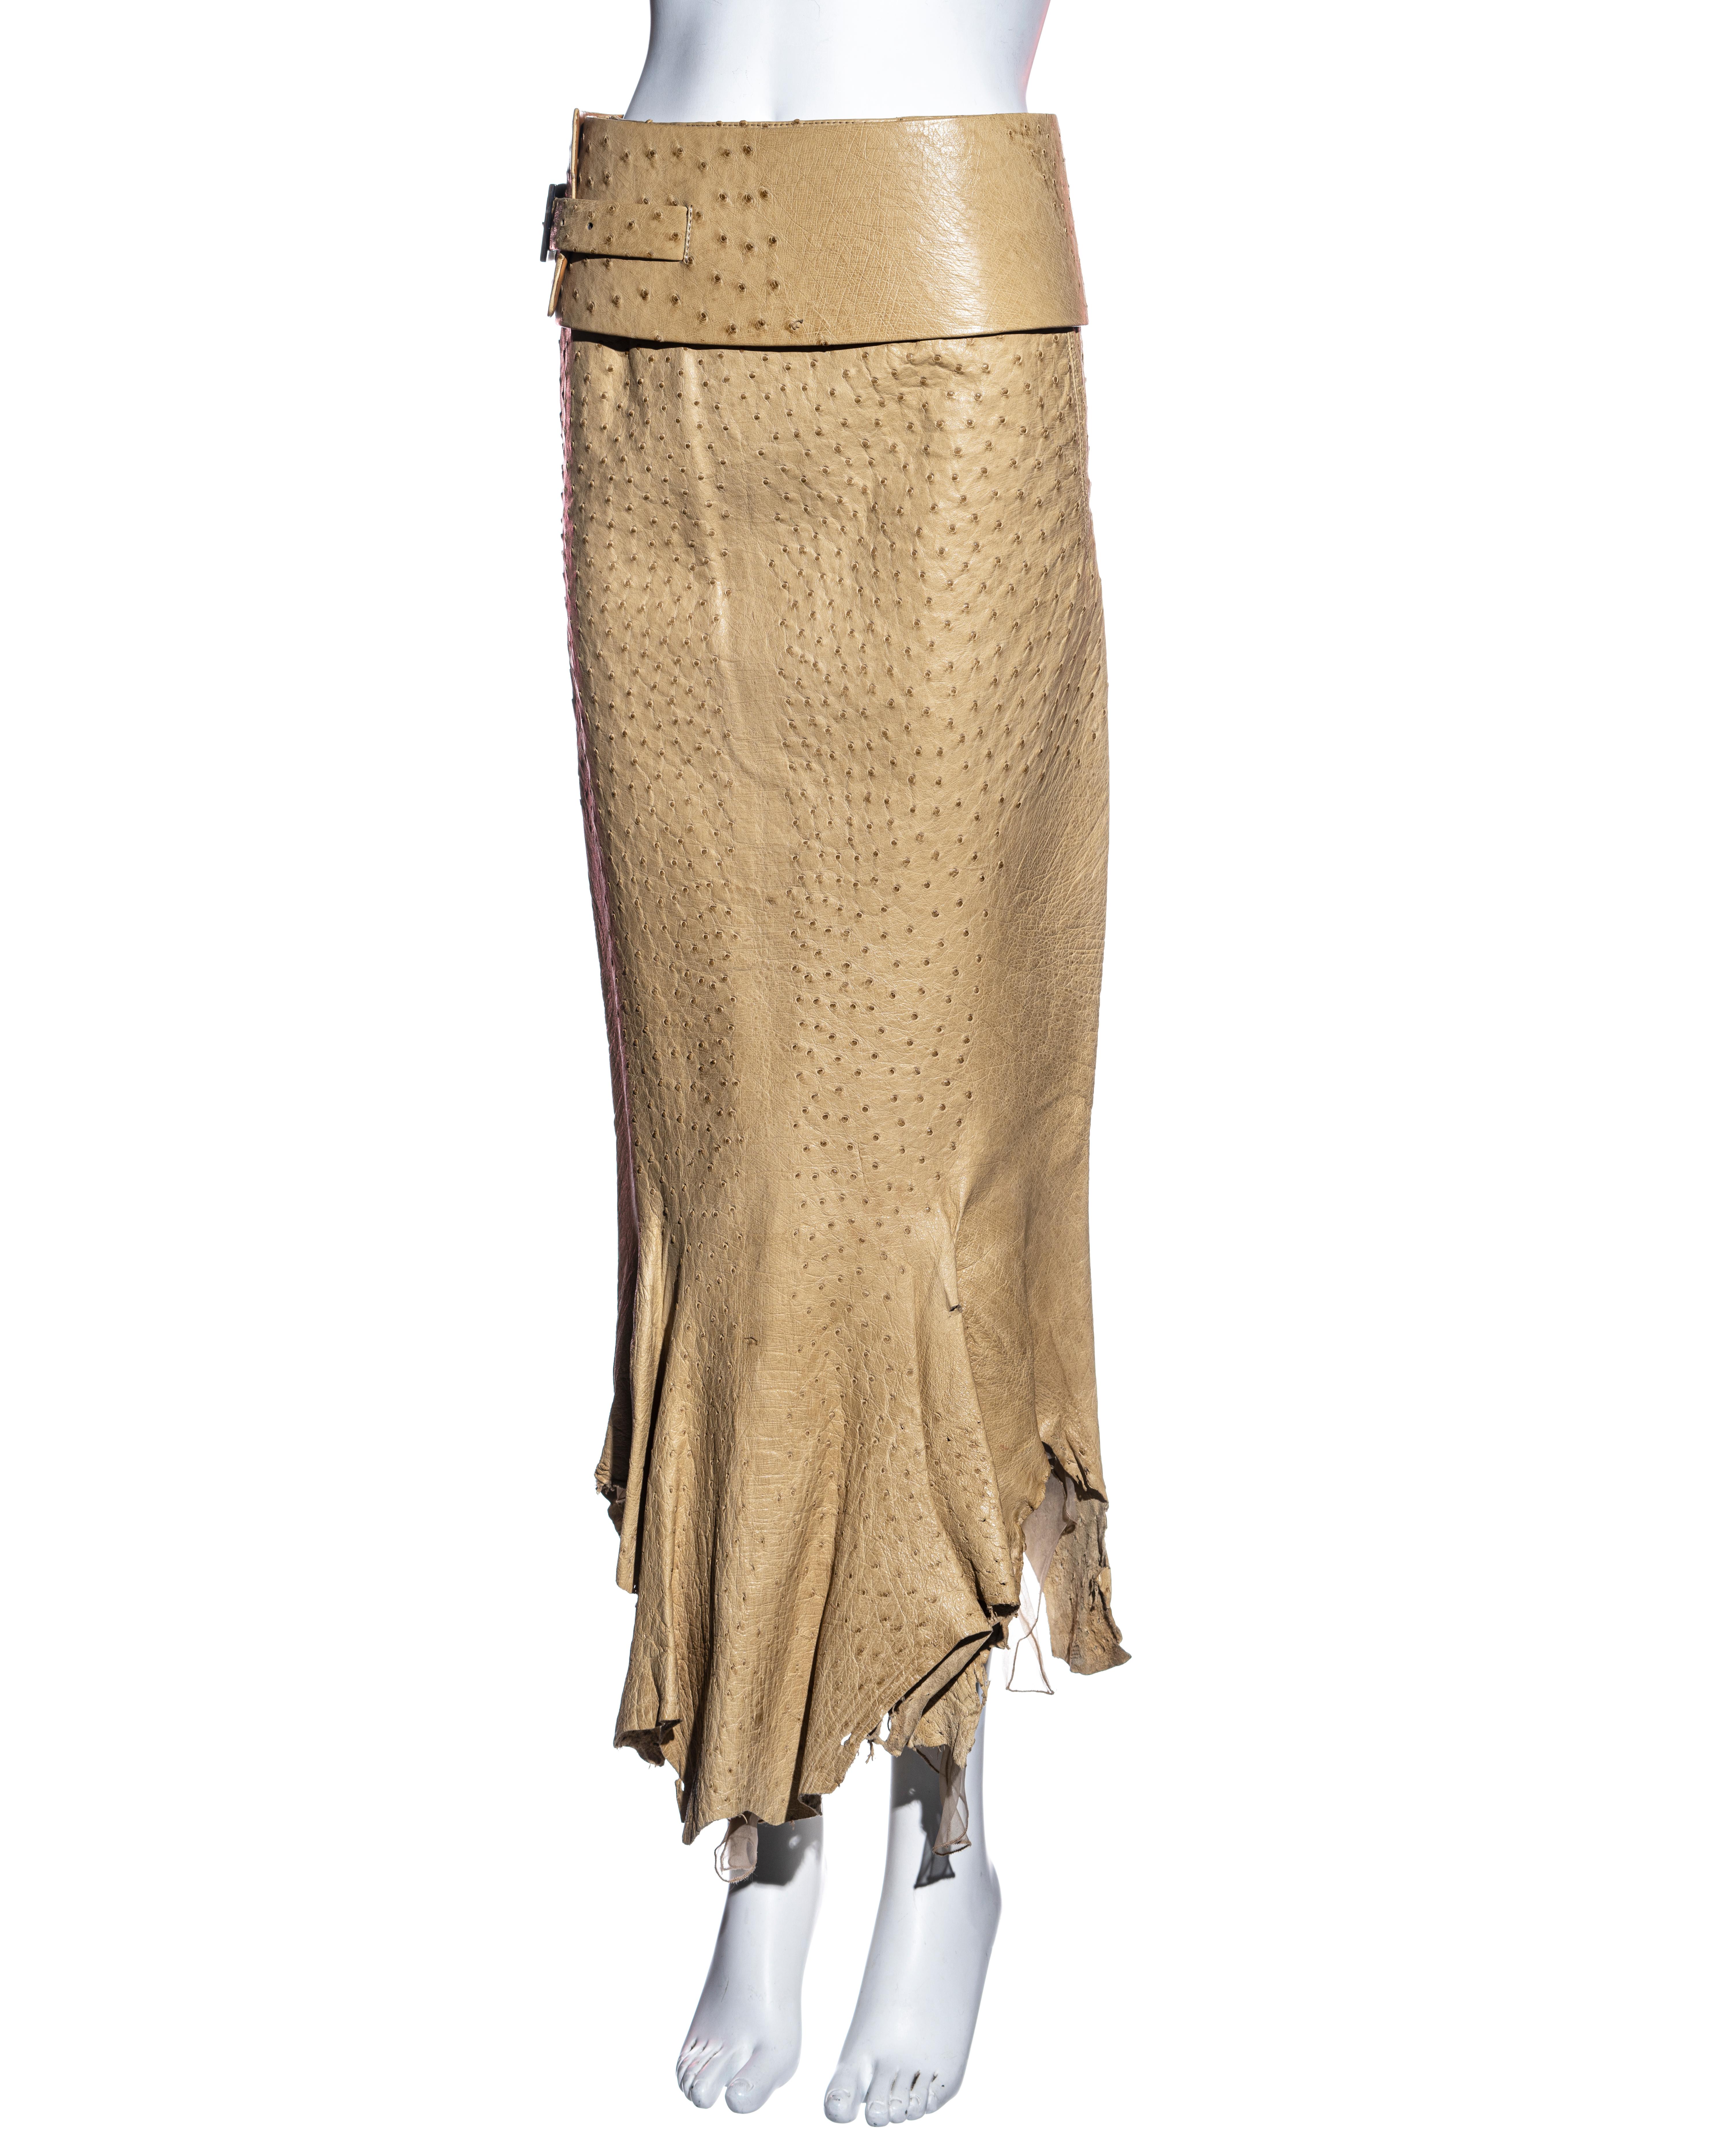 ▪ Gianfranco Ferre beige ostrich leather skirt and belt 
▪ Ankle length 
▪ Silk organza underskirt 
▪ Raw edge hem 
▪ Matching corset belt 
▪ IT 44 - FR 40 - UK 12 
▪ Spring-Summer 2000